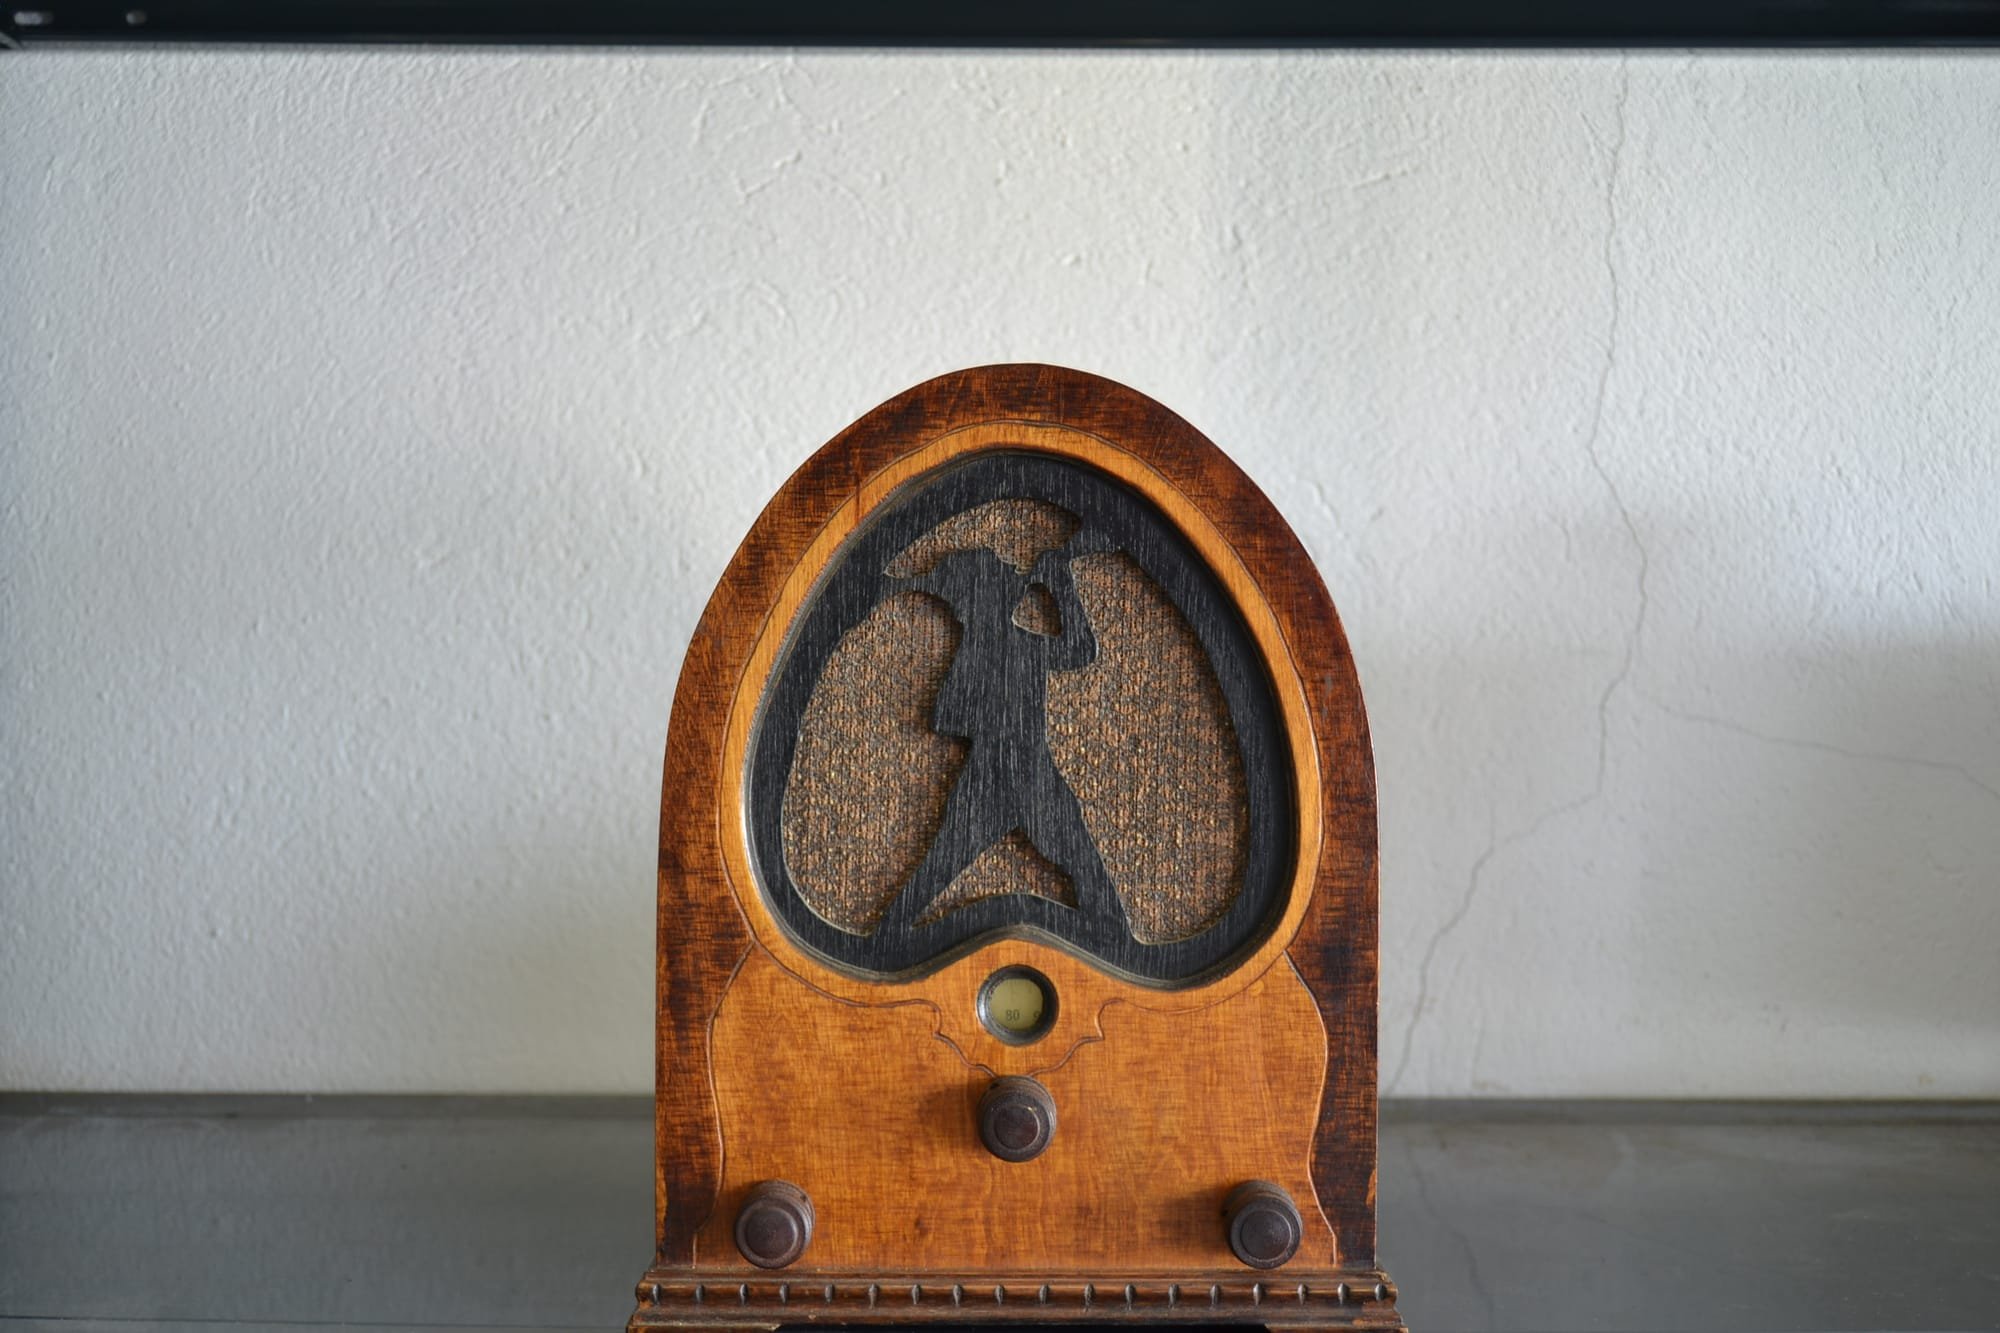 1931 Peter Pan Radio Model 84